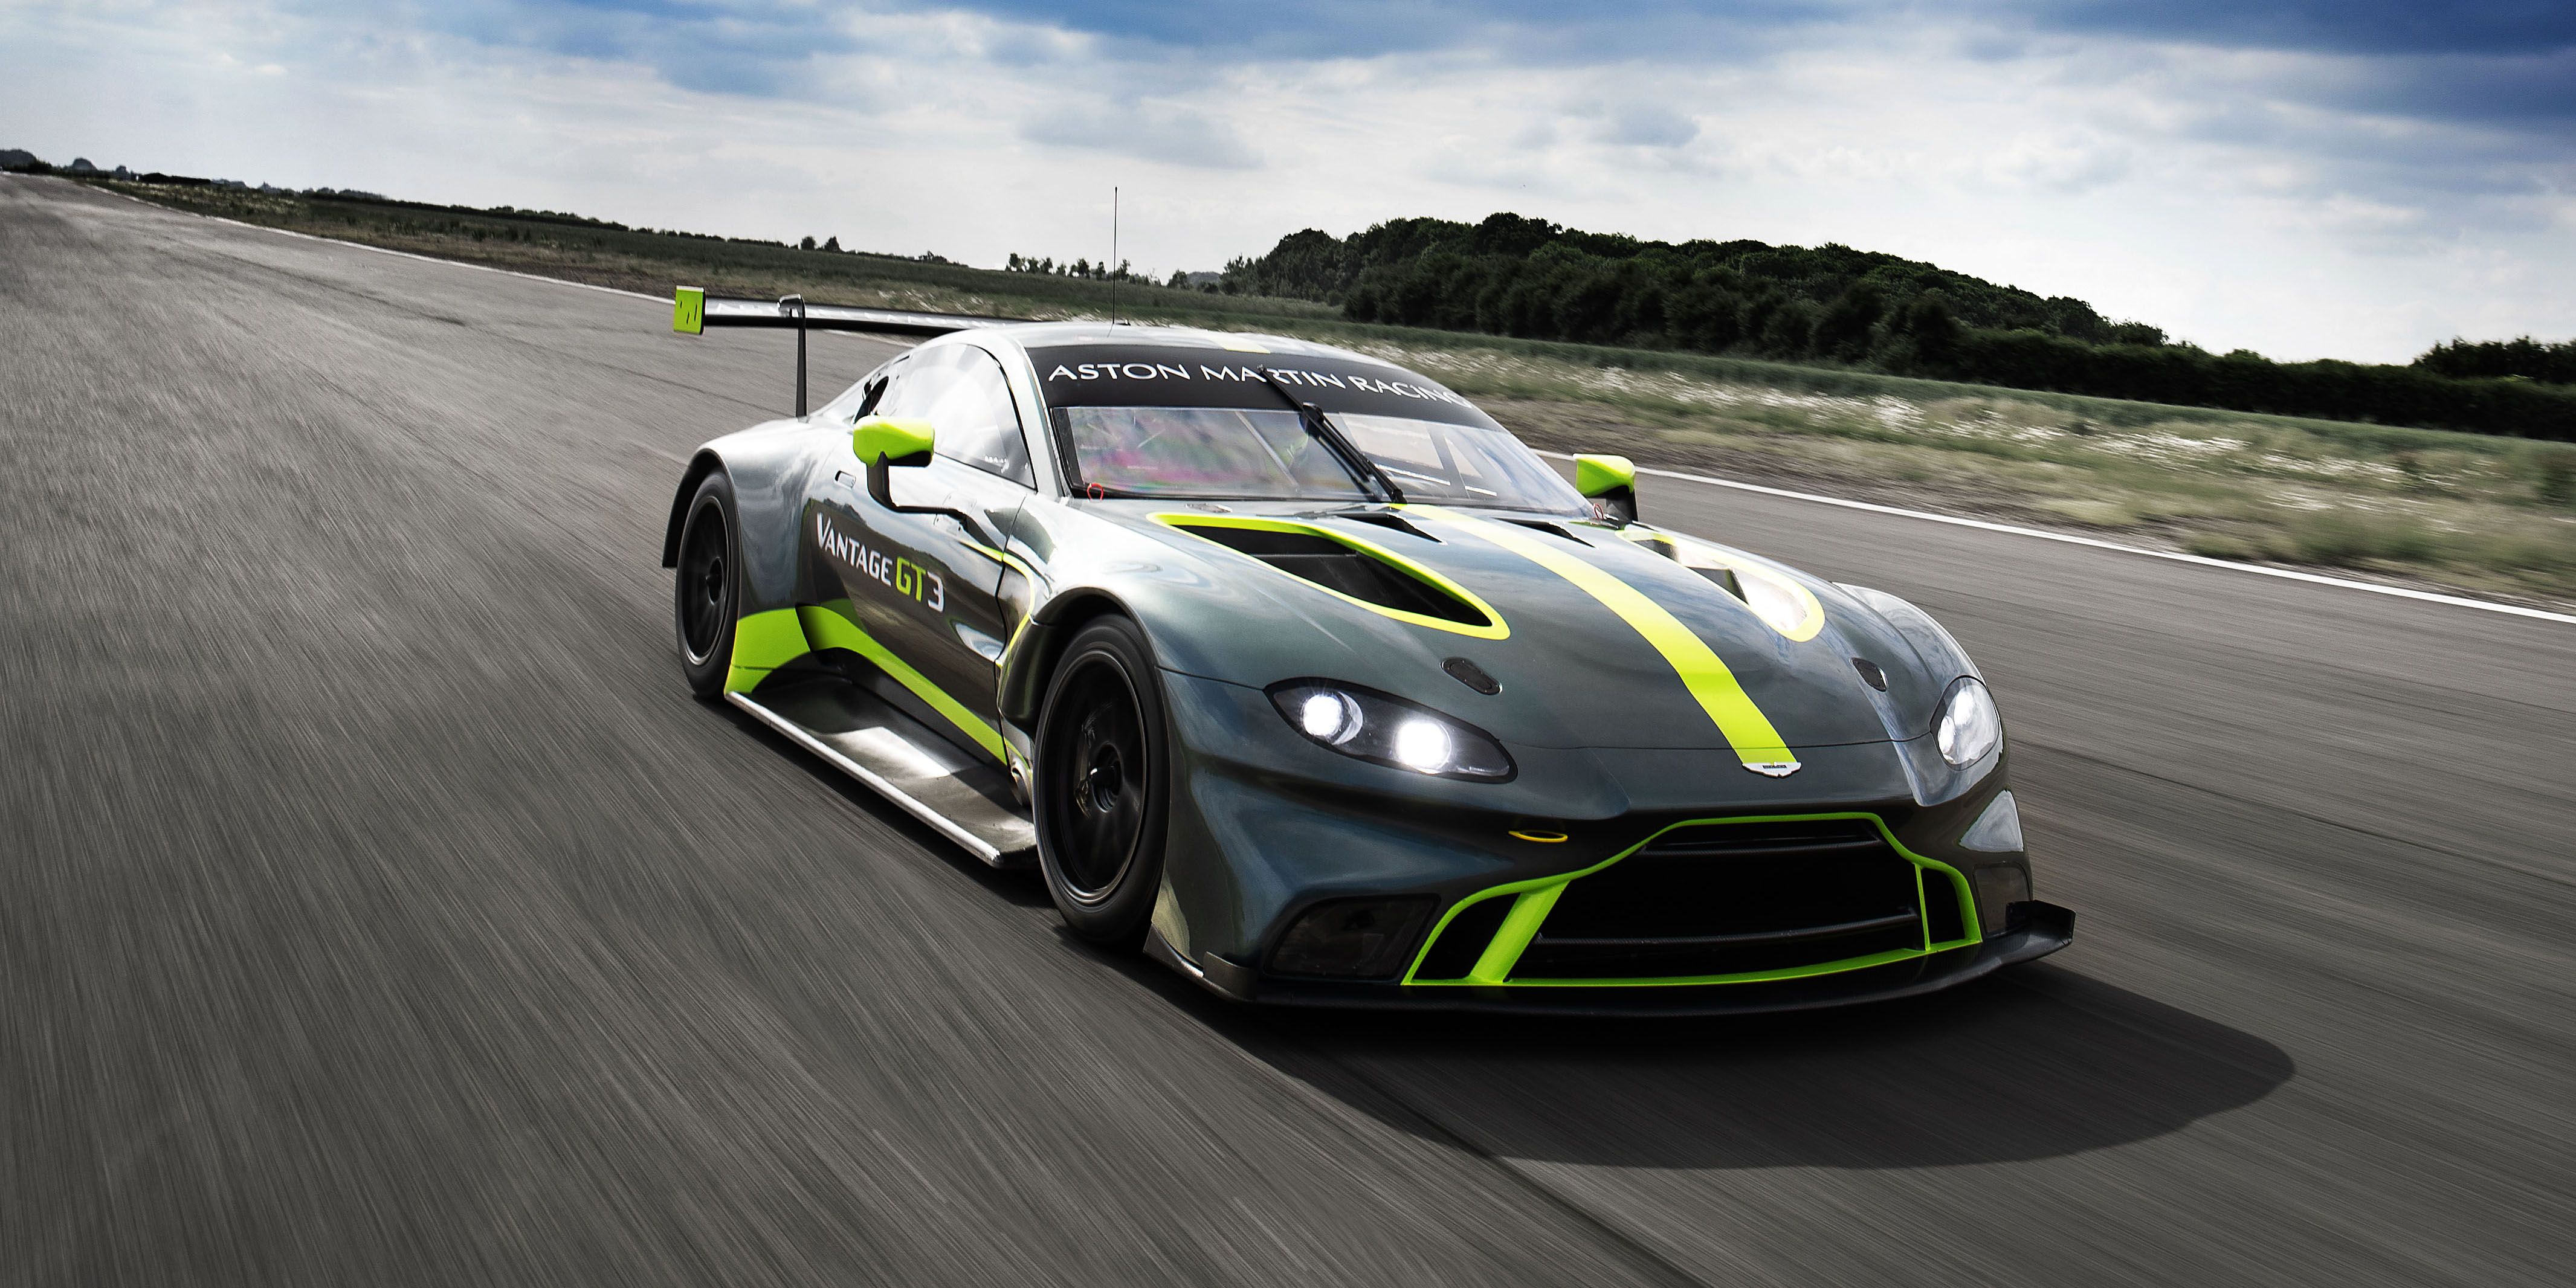 Modstand Folde Der er en tendens No Surprise, Aston Martin's New Race Cars are Wonderful